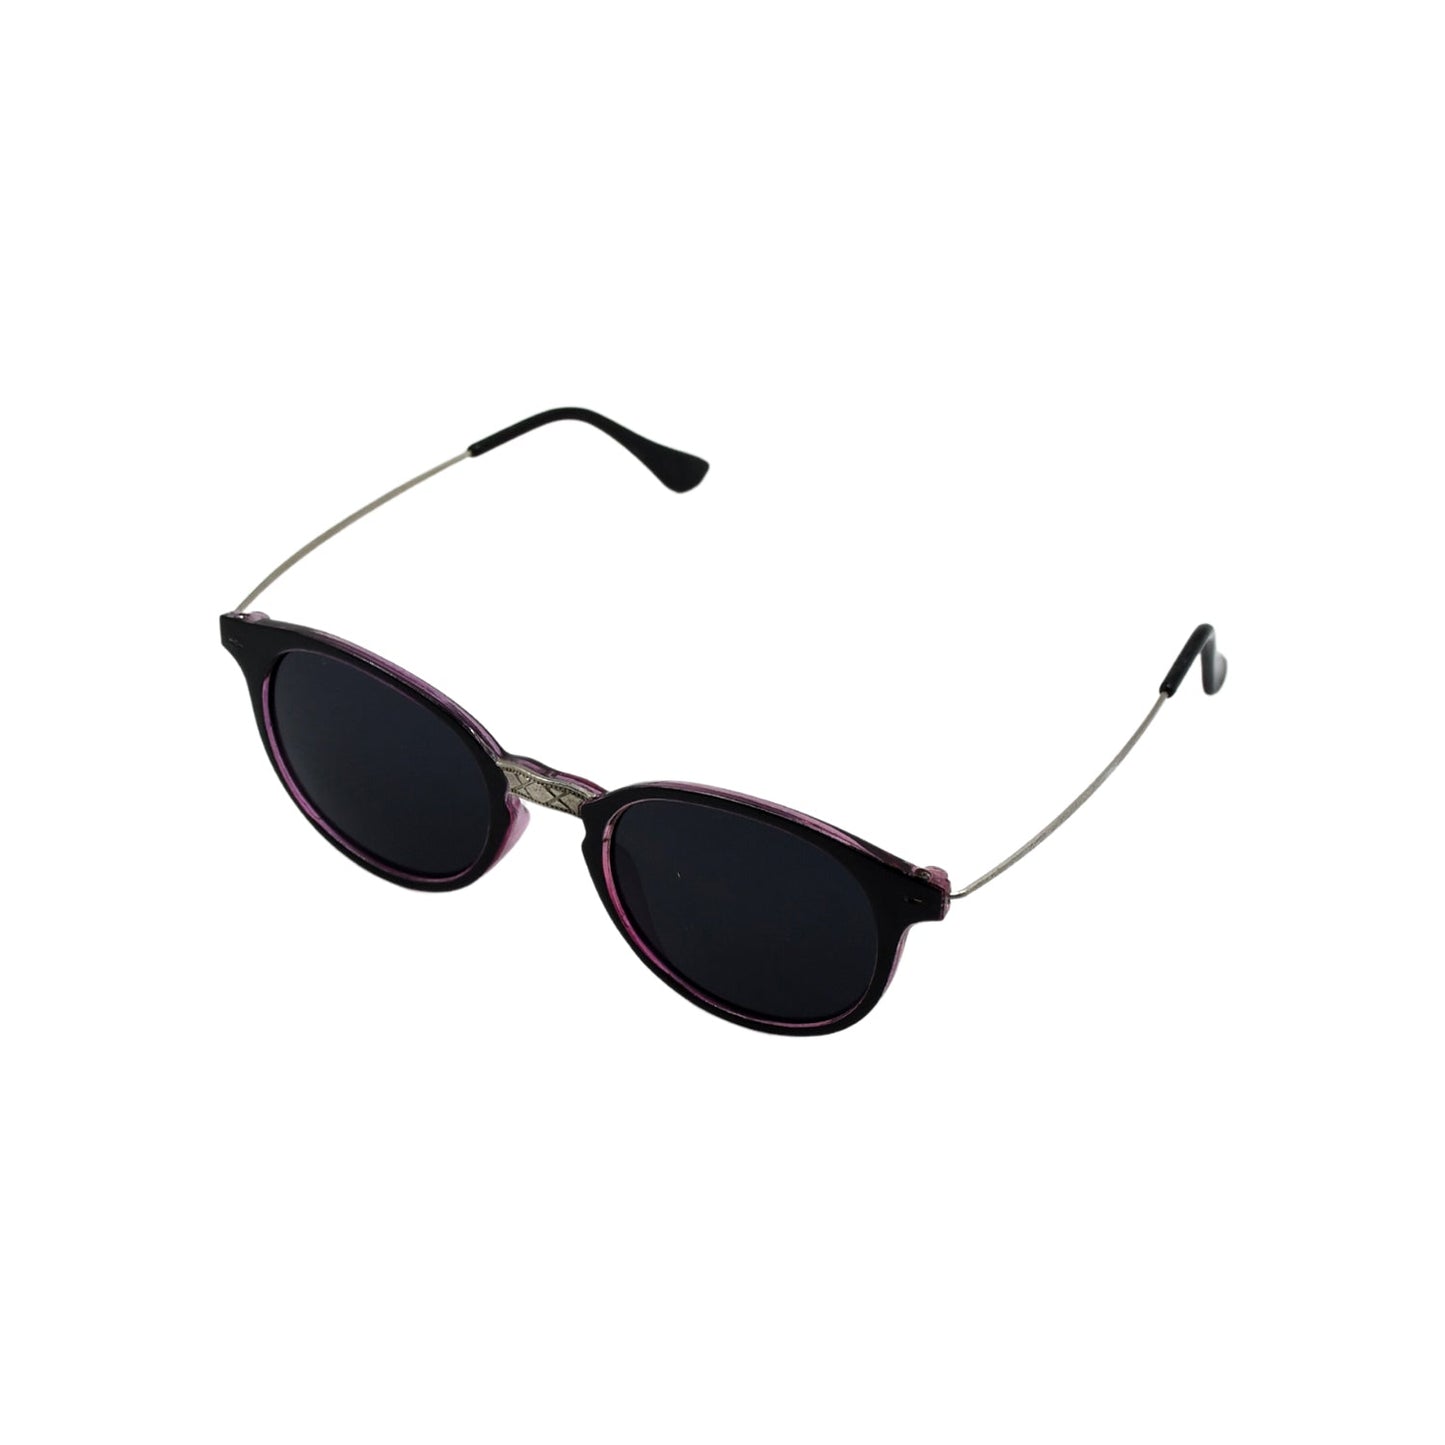 Sunglasses Light Weight & Classic Style Frame Sunglasses For Men, Women & Boys Use Glasses